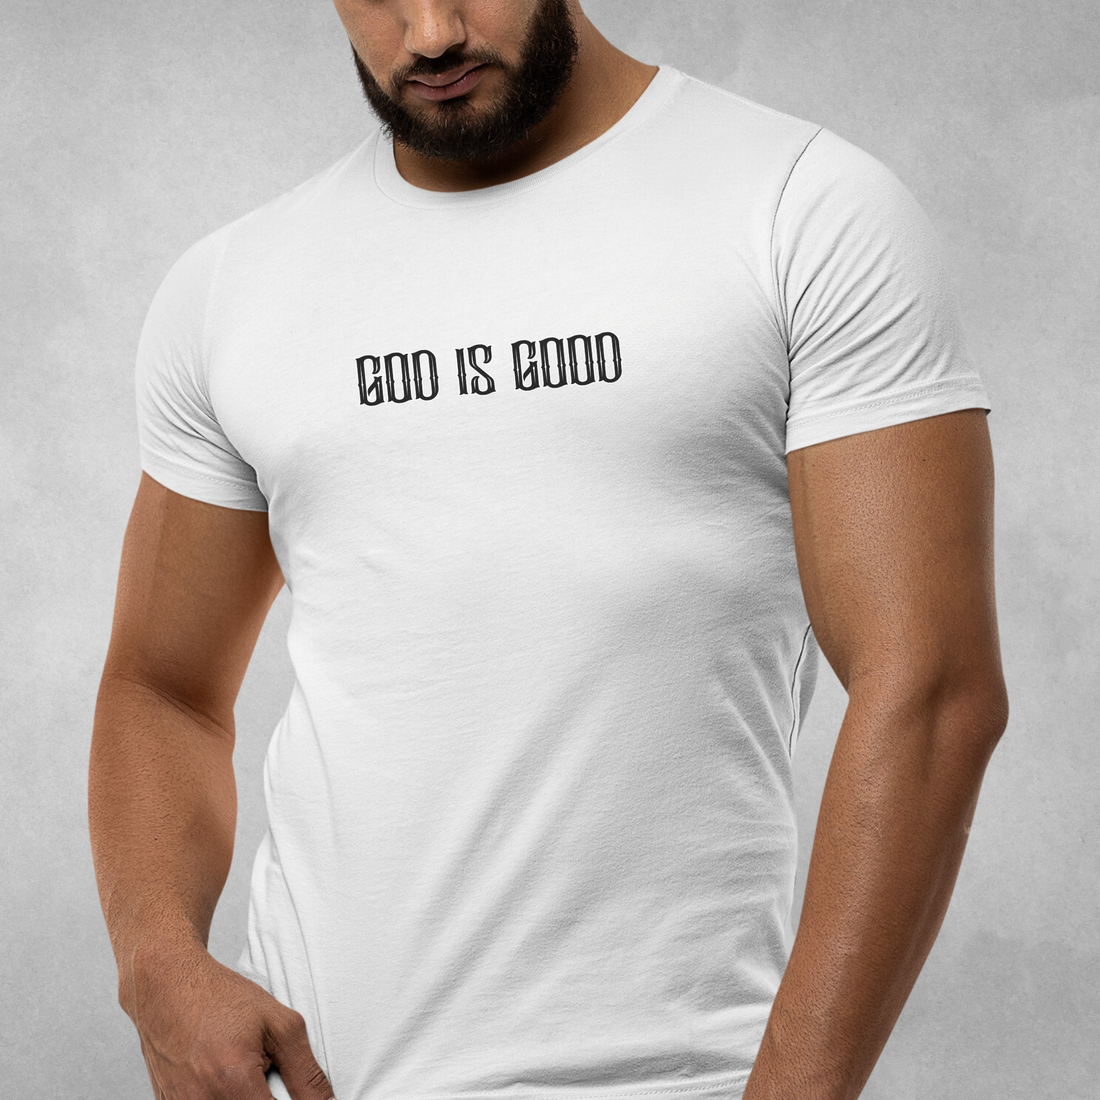 God Is Good - White Tee